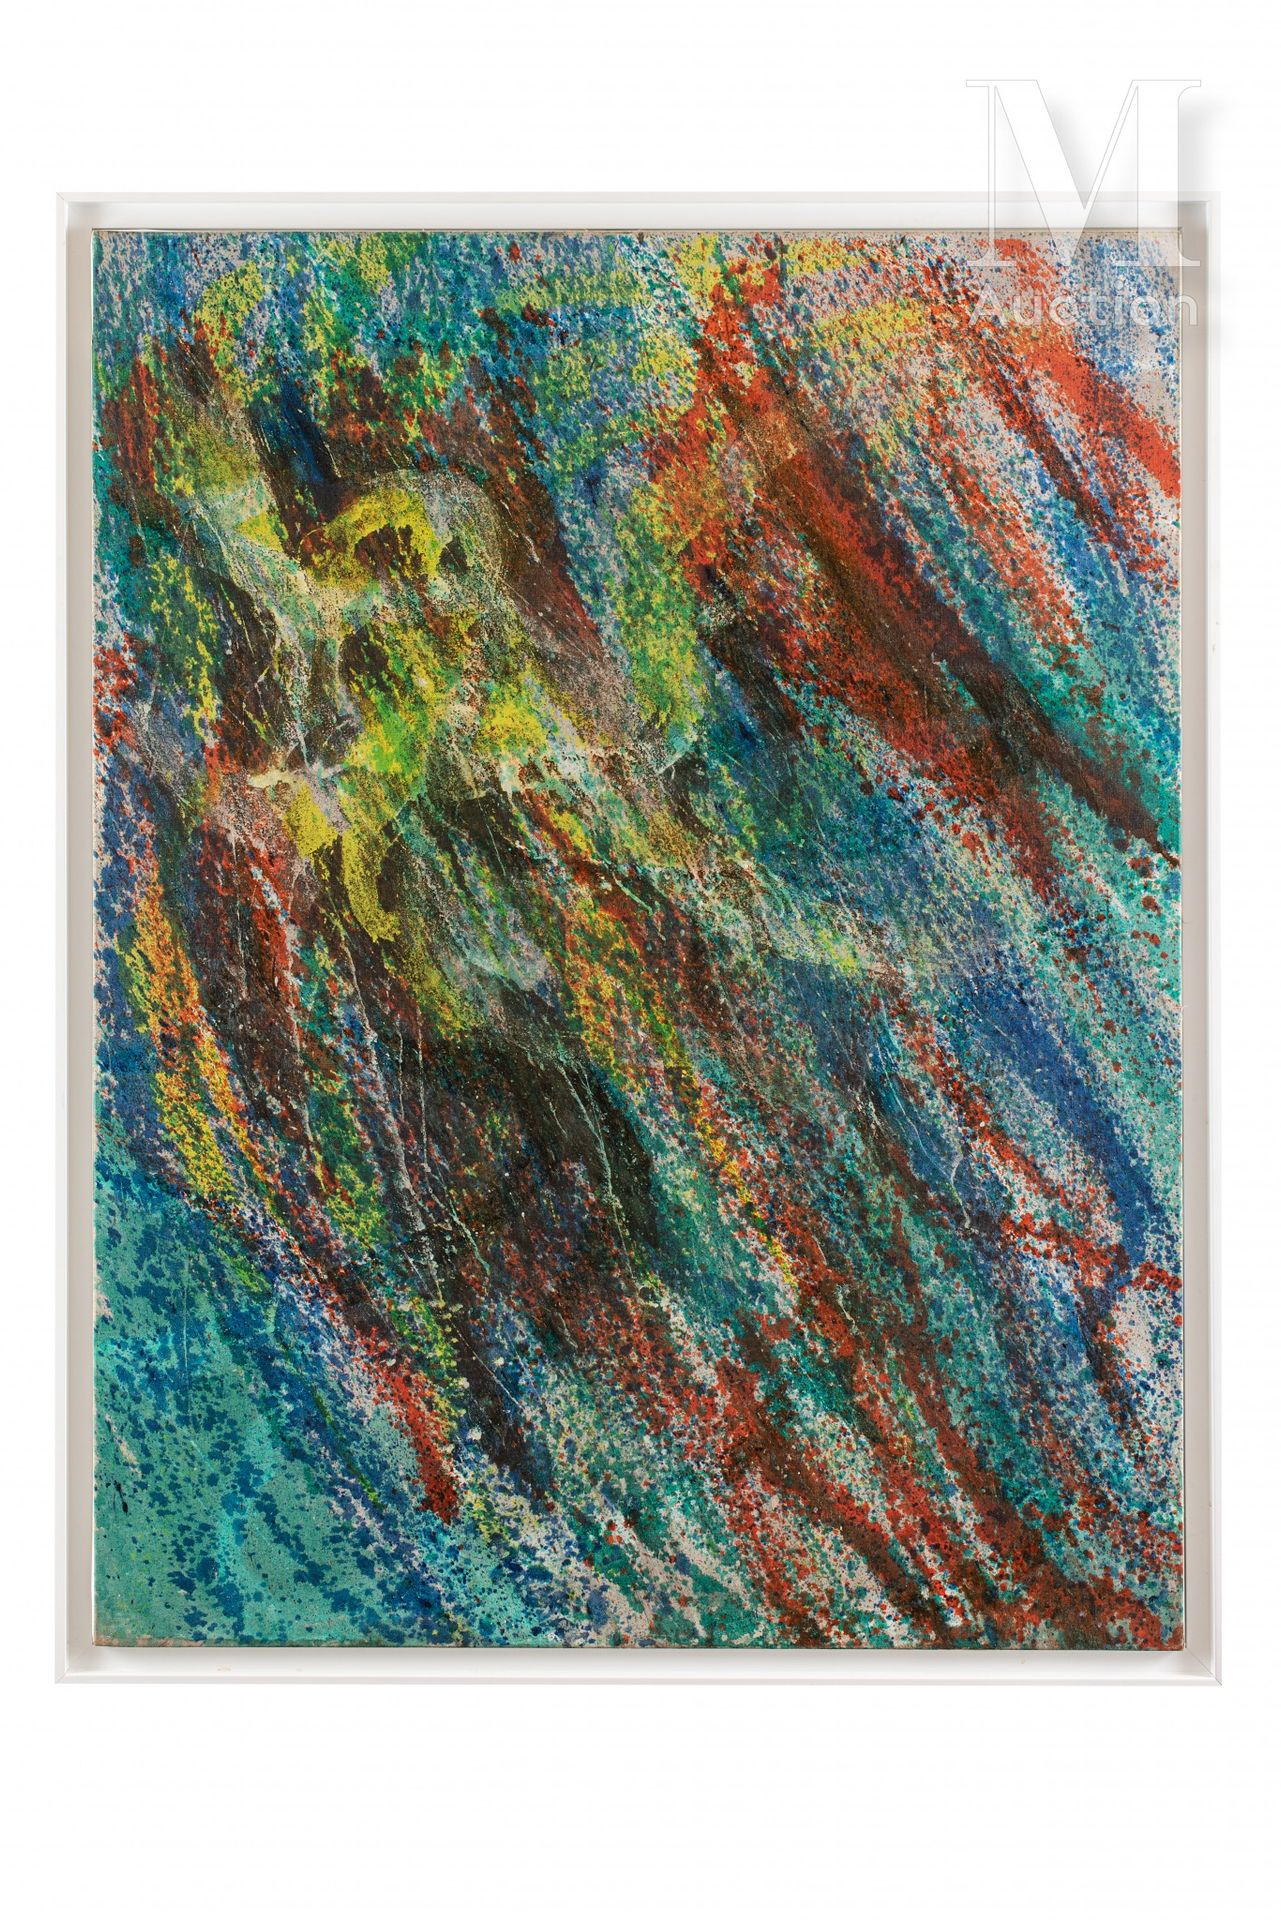 Stanley William HAYTER (1901-1988) La pieuvre, 1963

Huile sur toile

116 x 89 c&hellip;